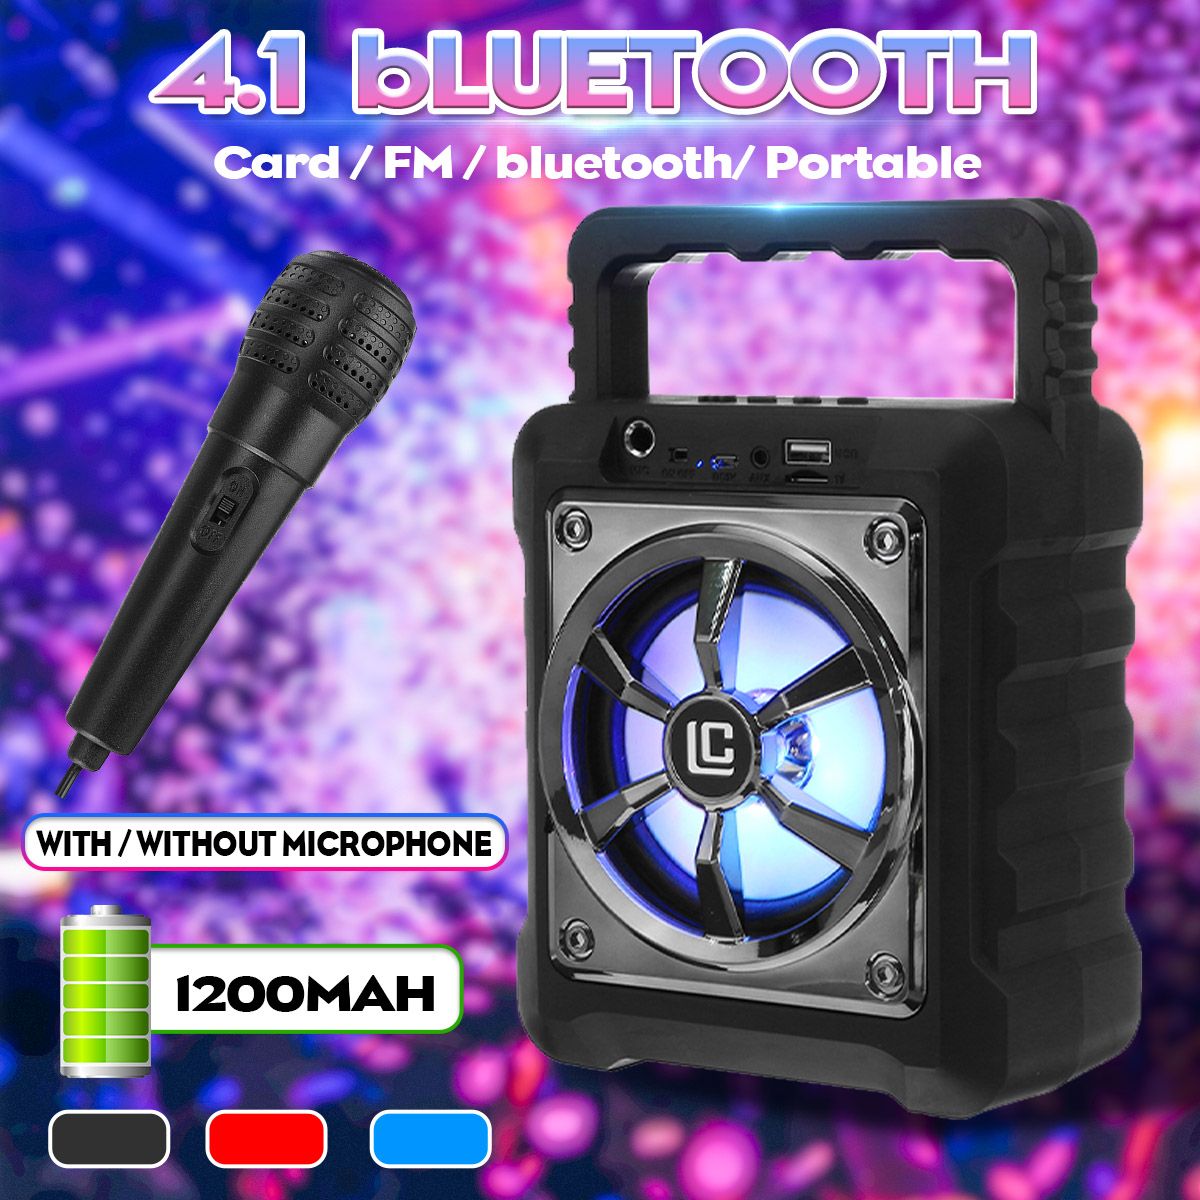 Bakeey-1200mAh-Portable-bluetooth-Hi-Fi-Speaker-Outdoors-Waterproof-AUX-USB-TF-FM-Playing-Loudspeake-1647995